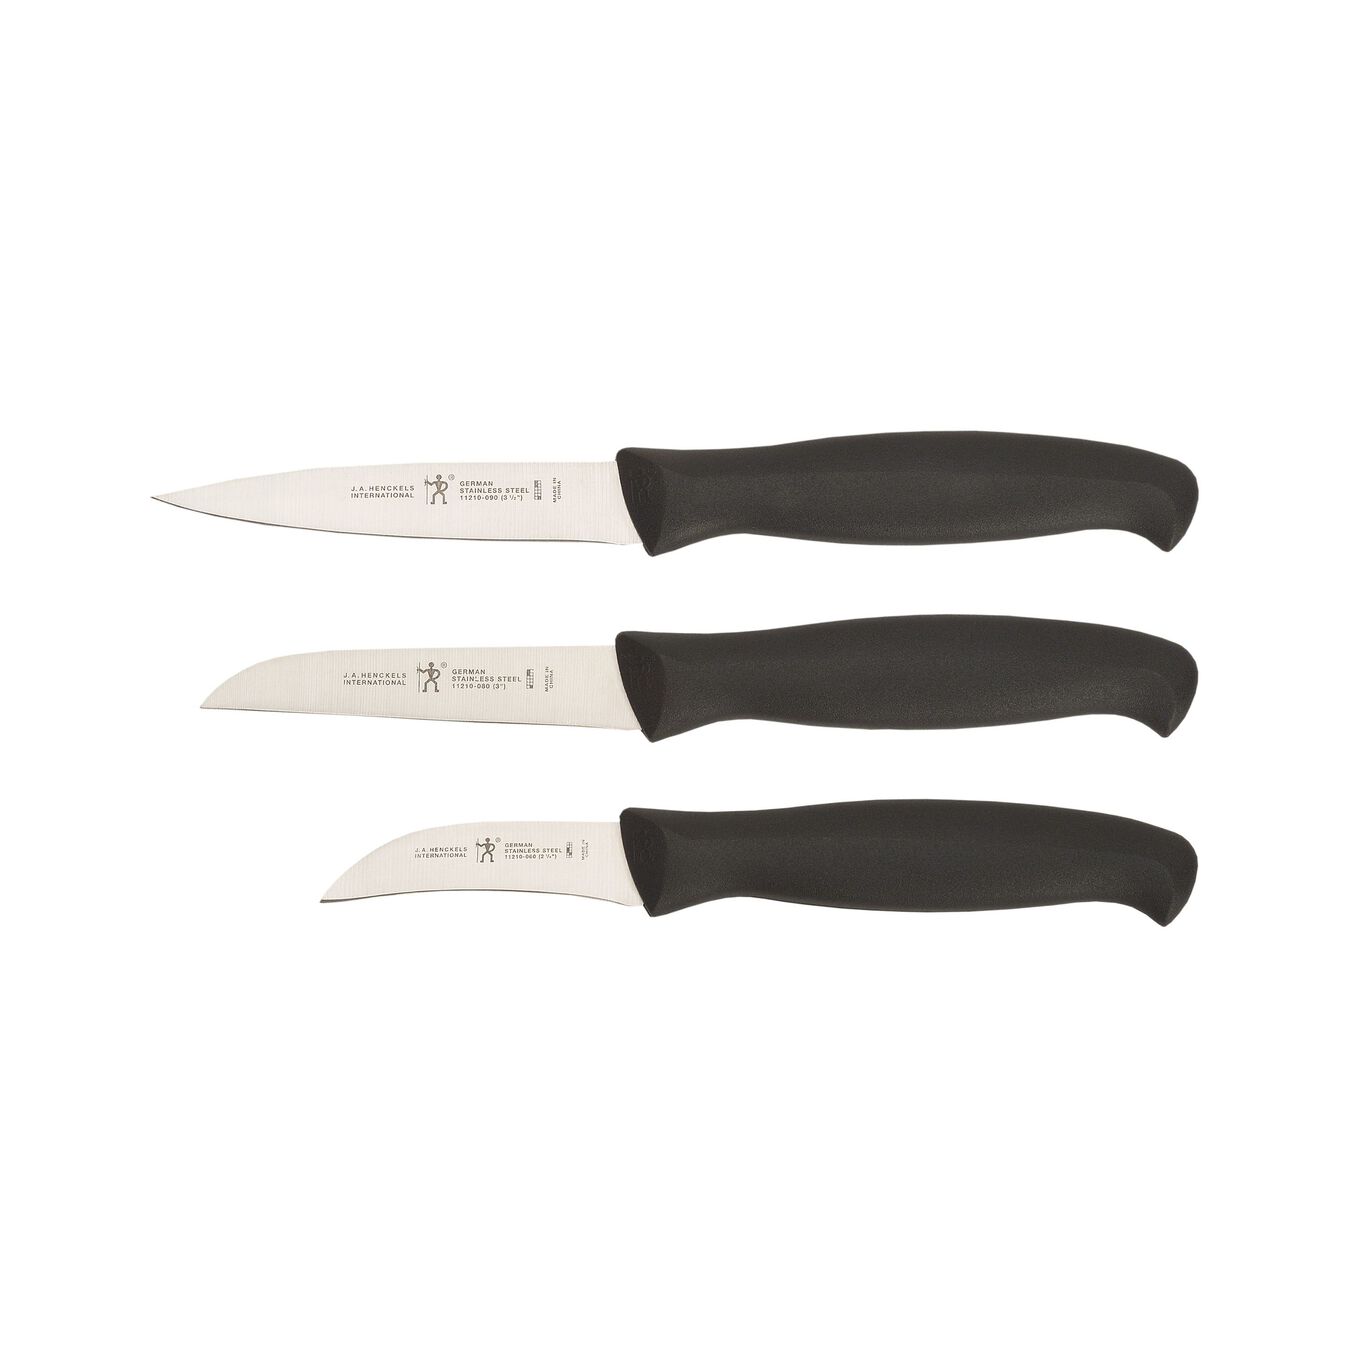 3-pc, Paring Knife Set - Black,,large 1